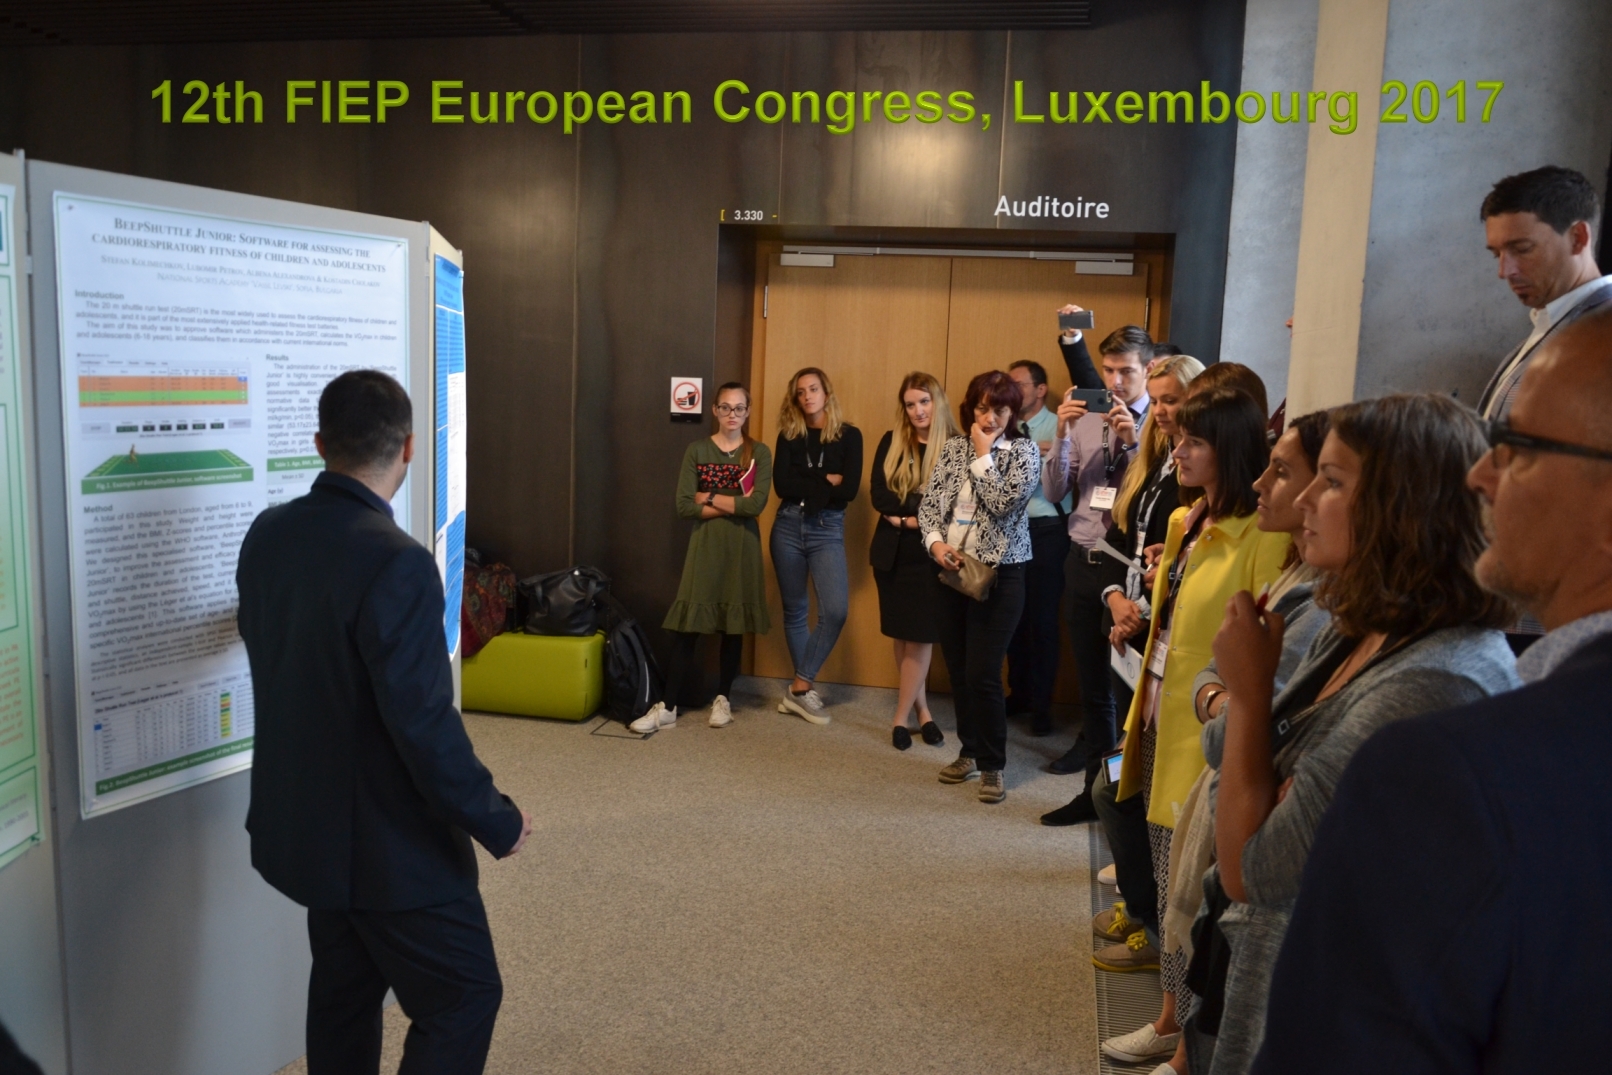 Stefan Kolimechkov at 12th FIEP European Congress at the University of Luxembourg, 2017